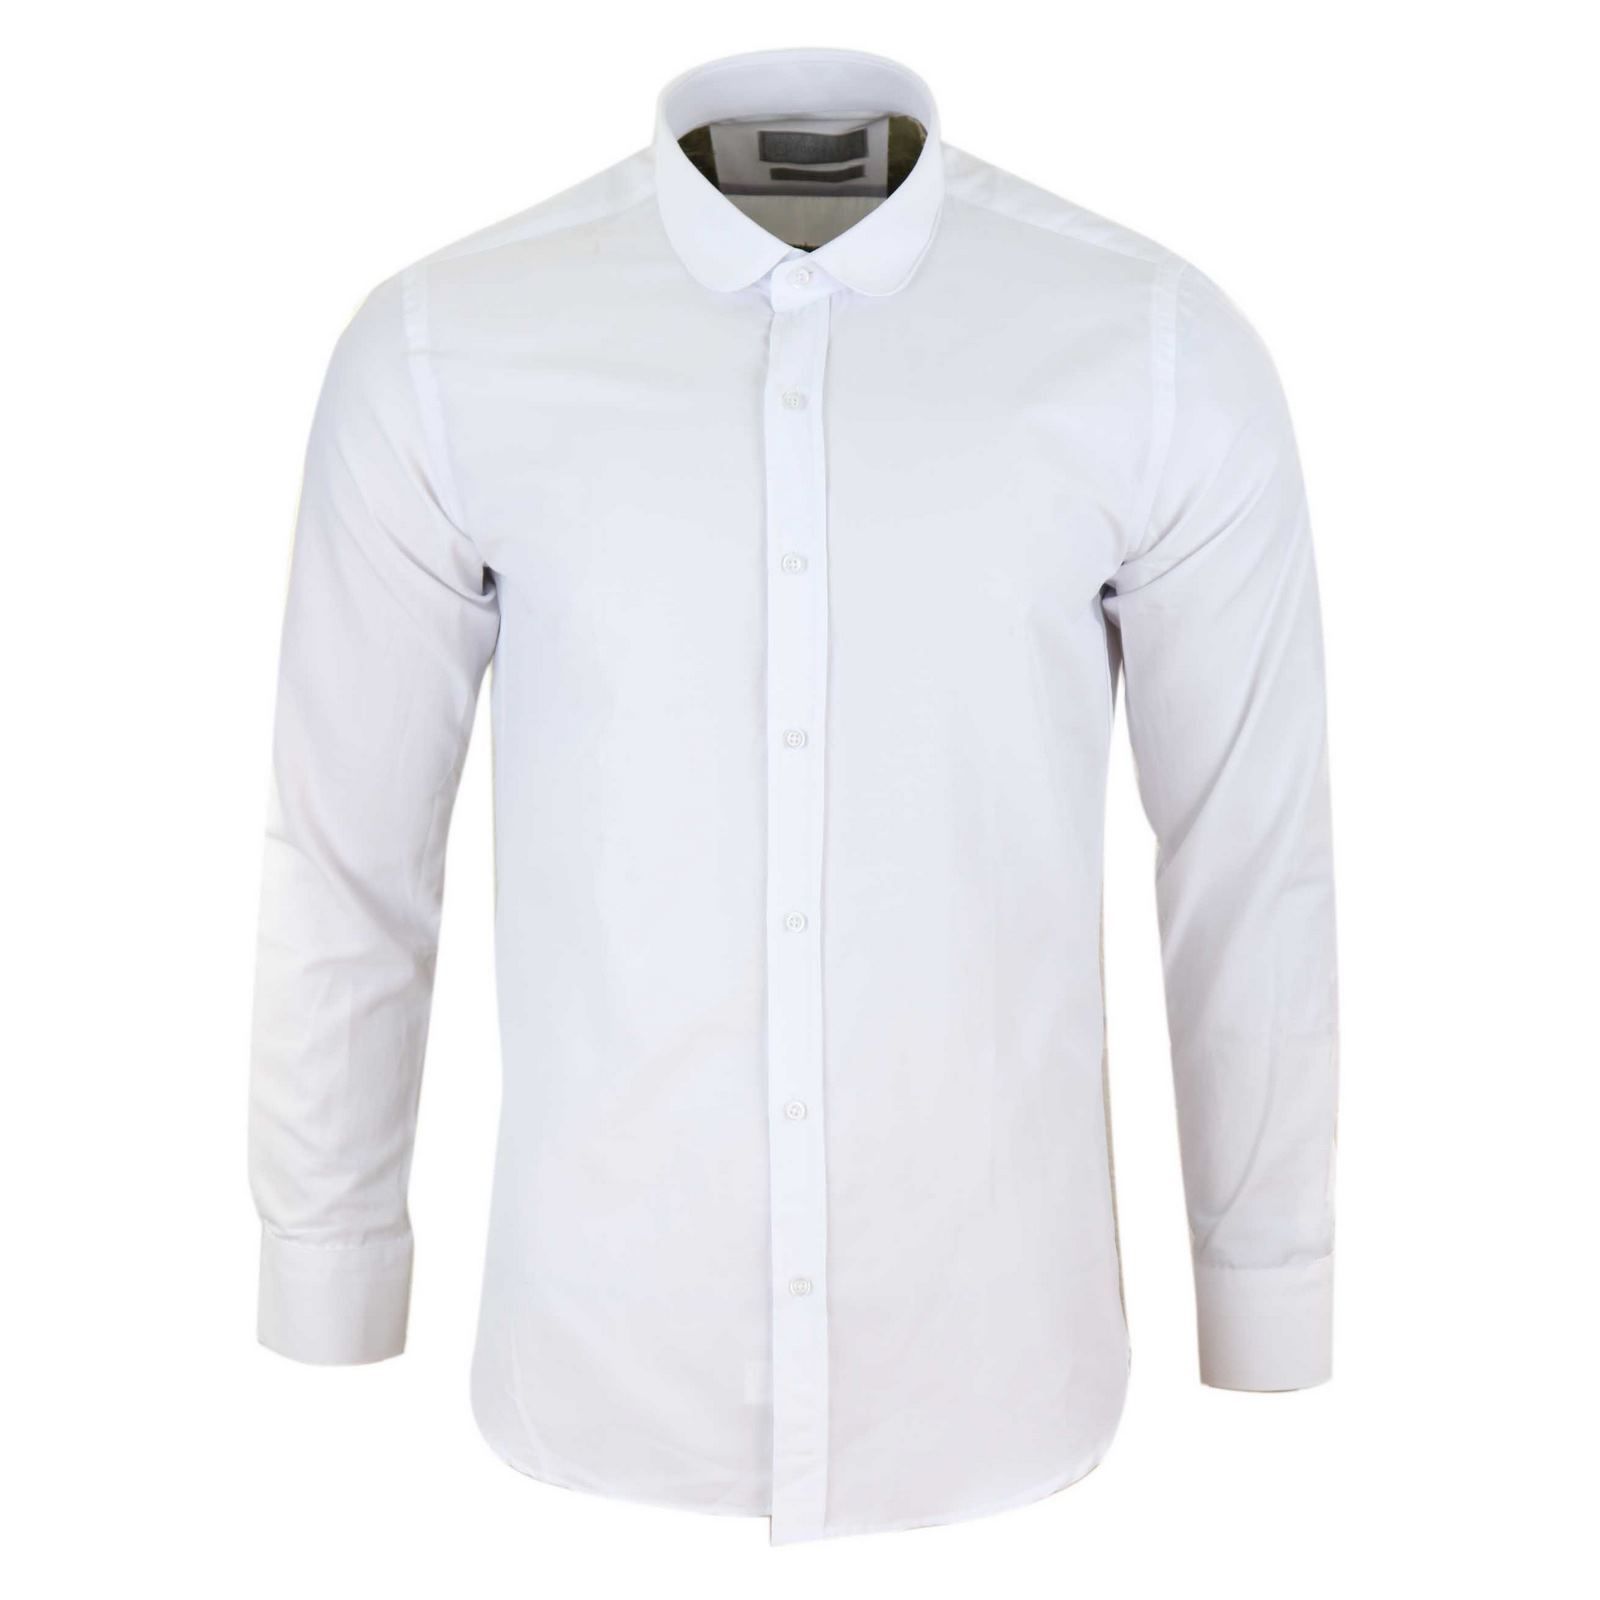 Mens White Club Collar Shirt: Buy ...